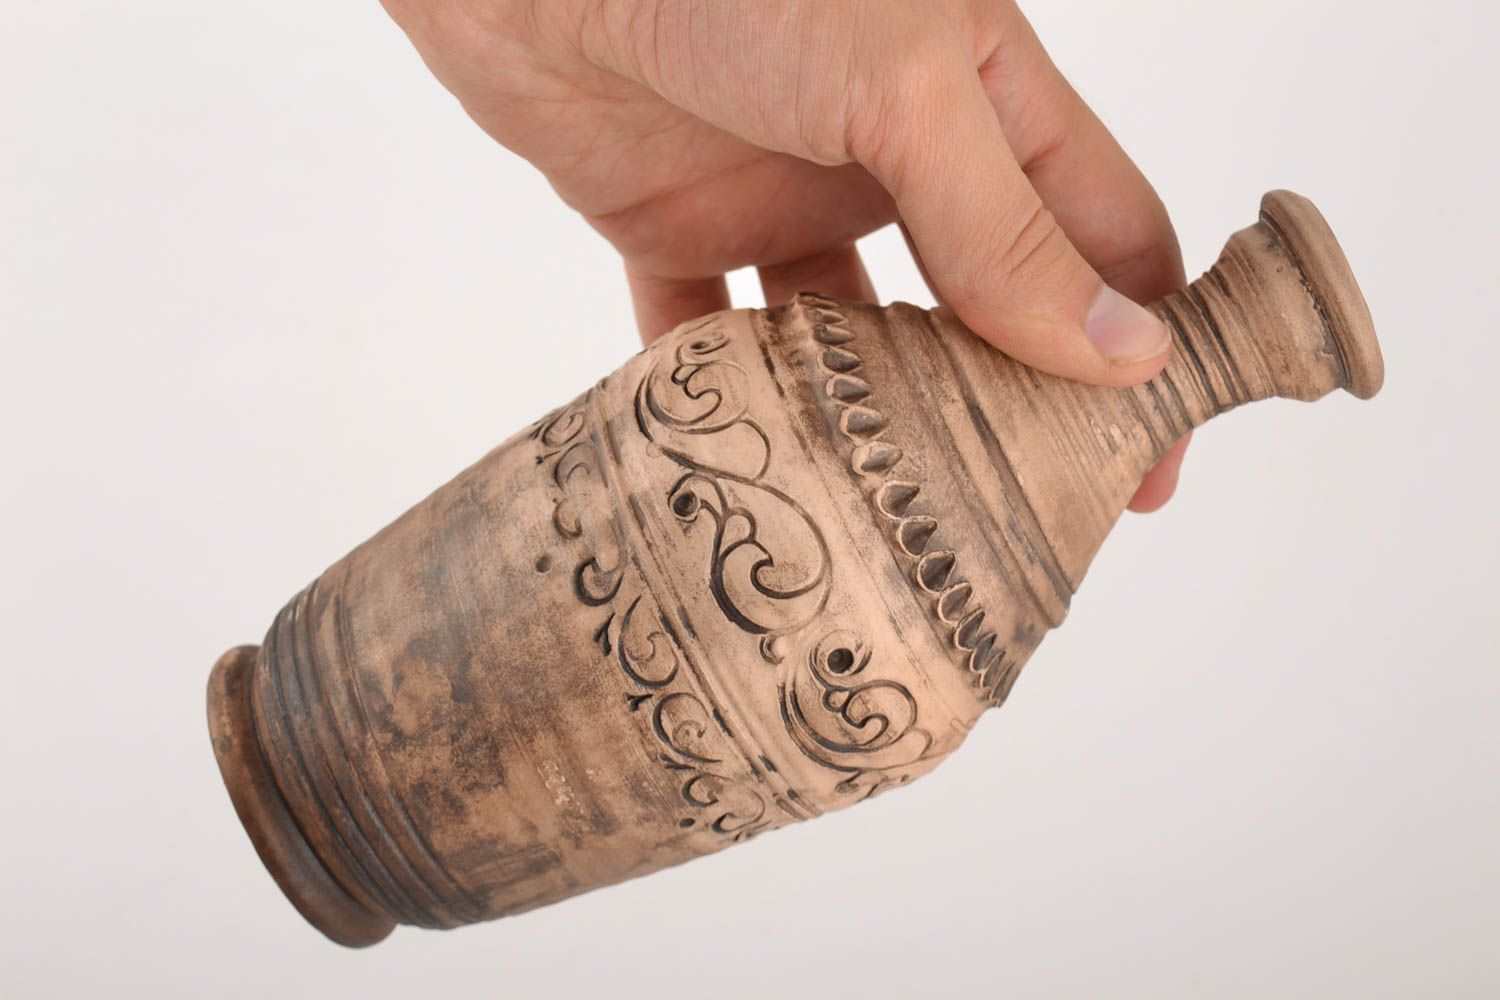 15 oz ceramic bottle shape ceramic pitcher carafe made of white clay 0,9 lb photo 4